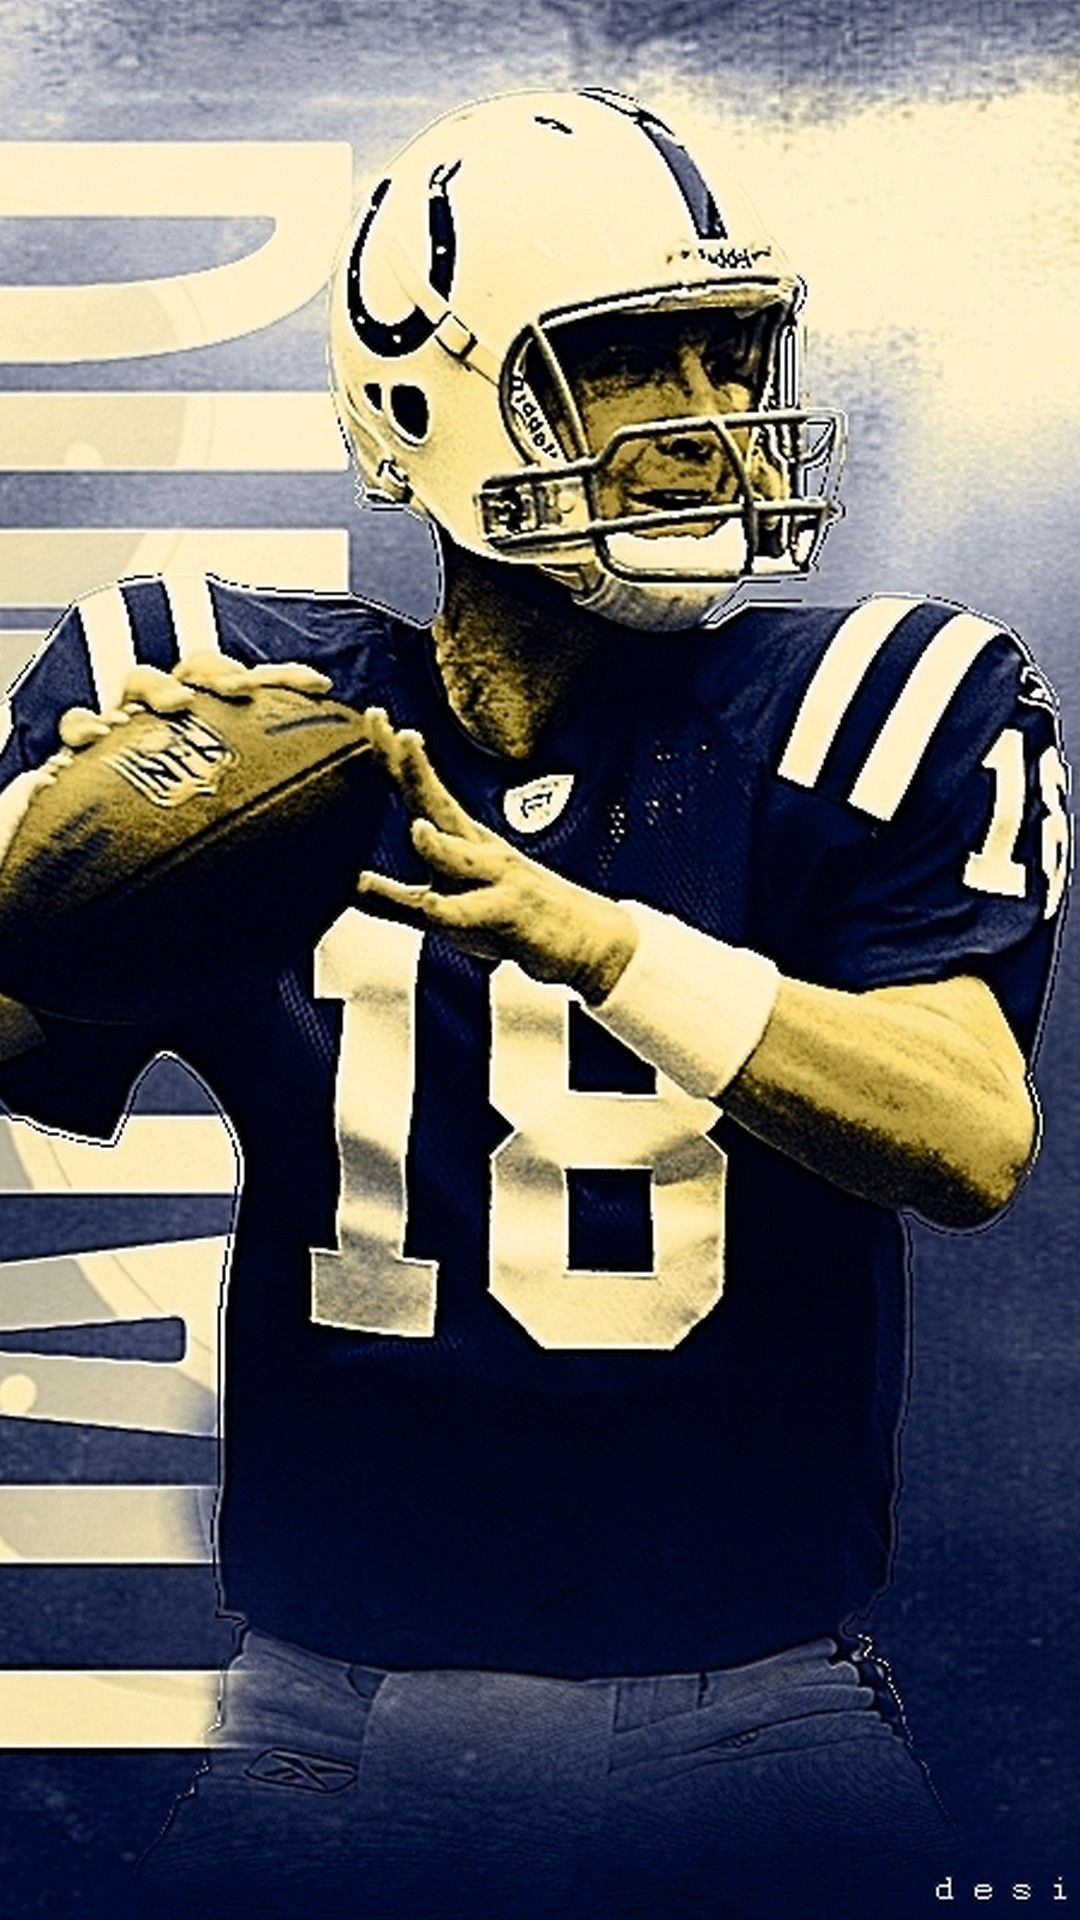 Peyton Manning Indianapolis Colts iPhone Wallpaper NFL Football Wallpaper. Nfl football wallpaper, Football wallpaper, Indianapolis colts